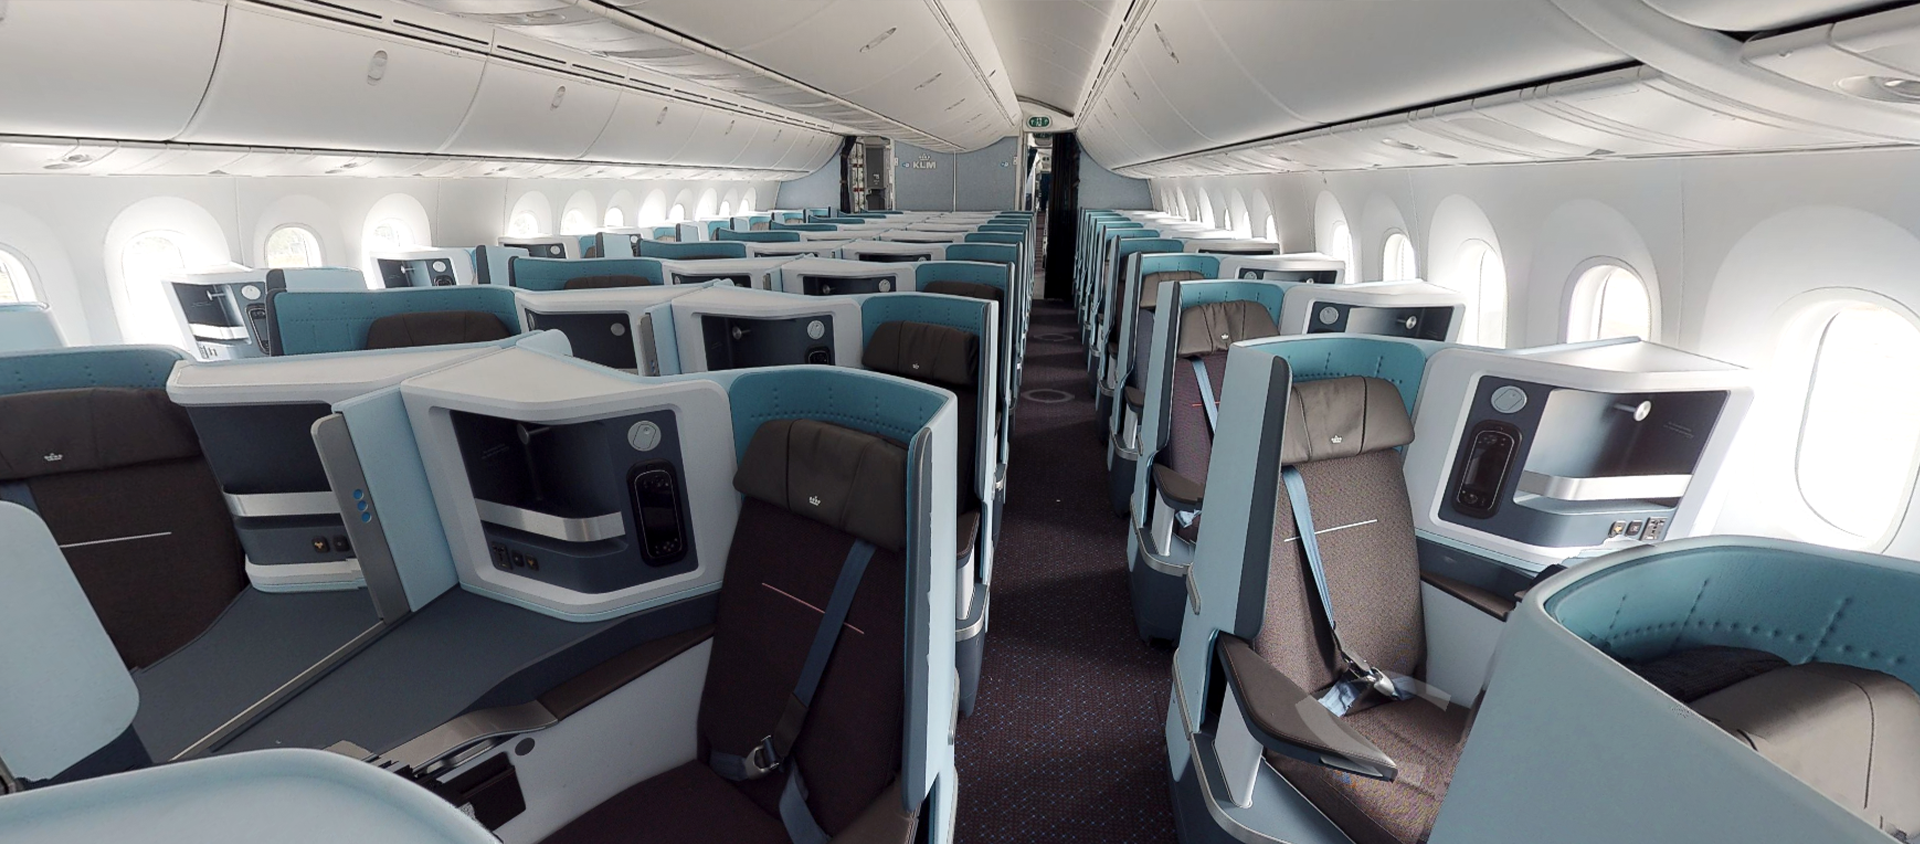 KLM 787 Business Class forward view